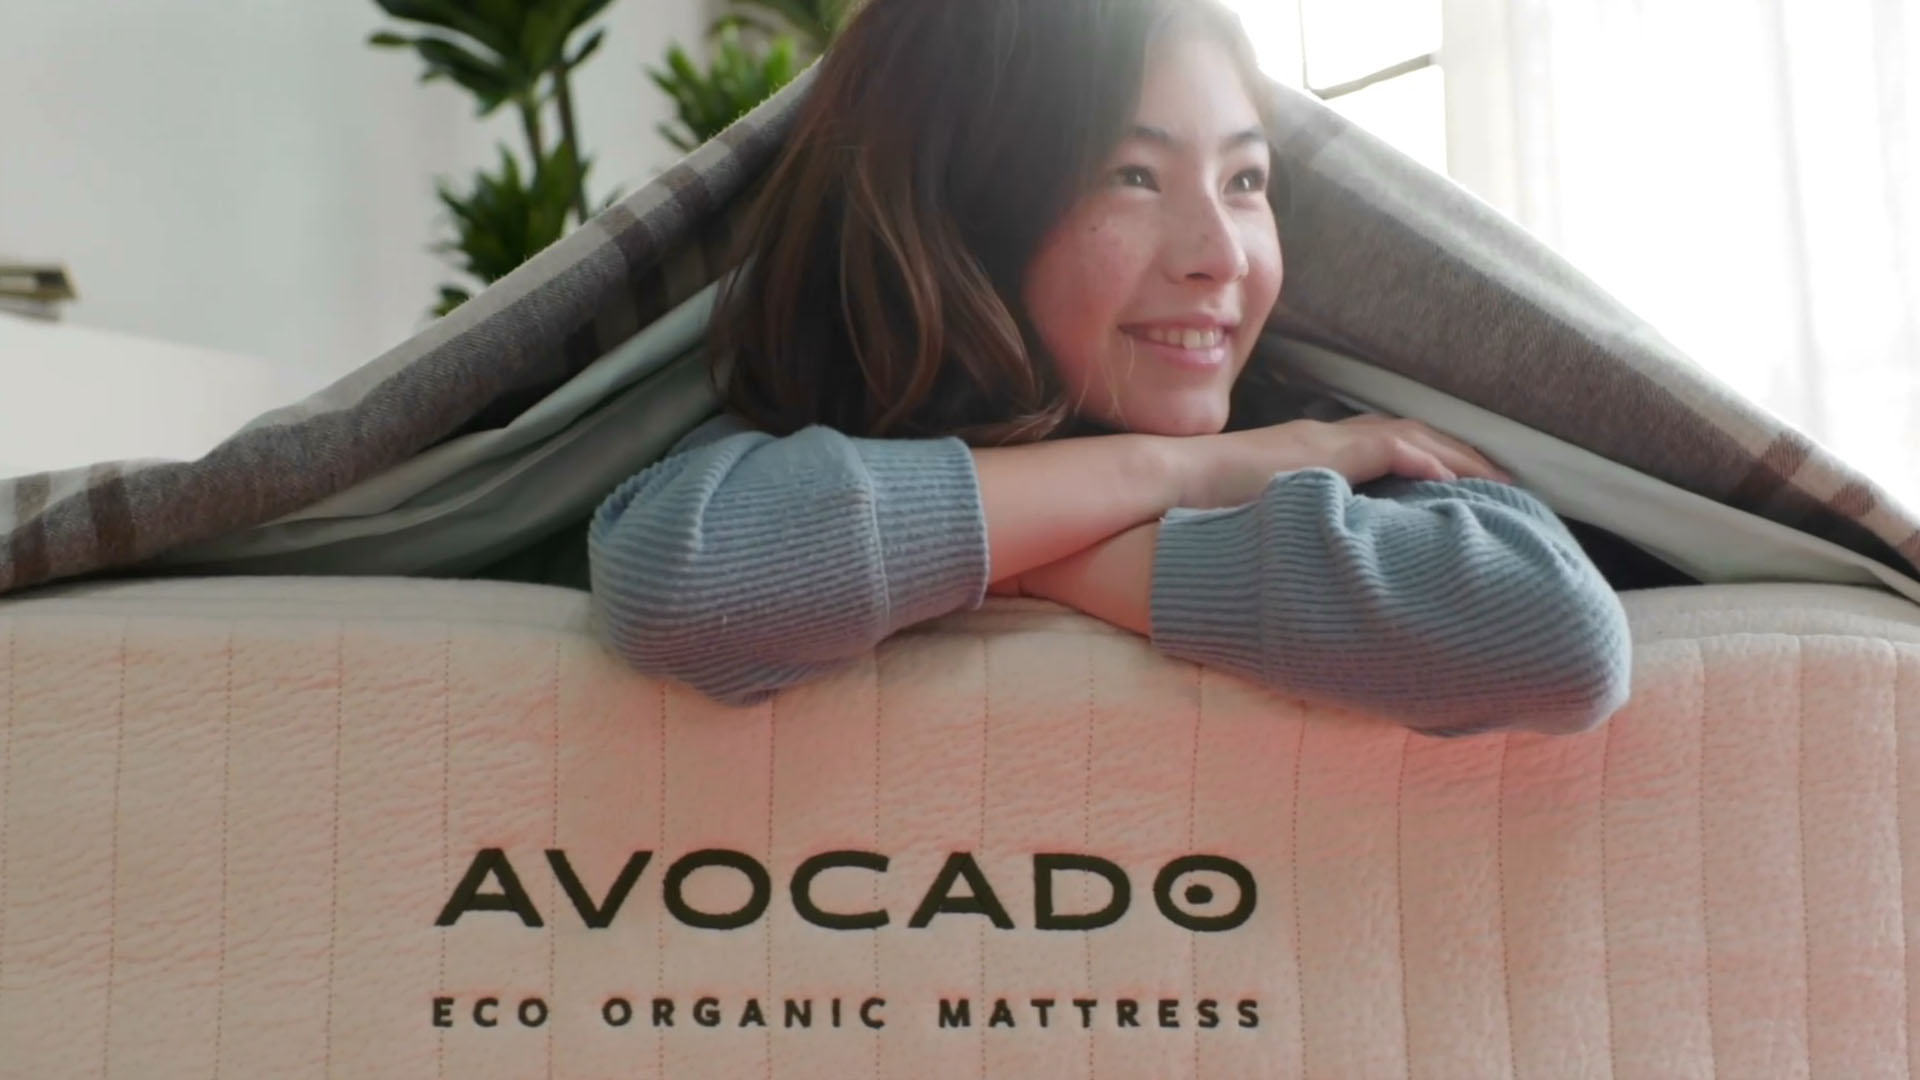 Who sells Avocado mattress near me in Huntersville